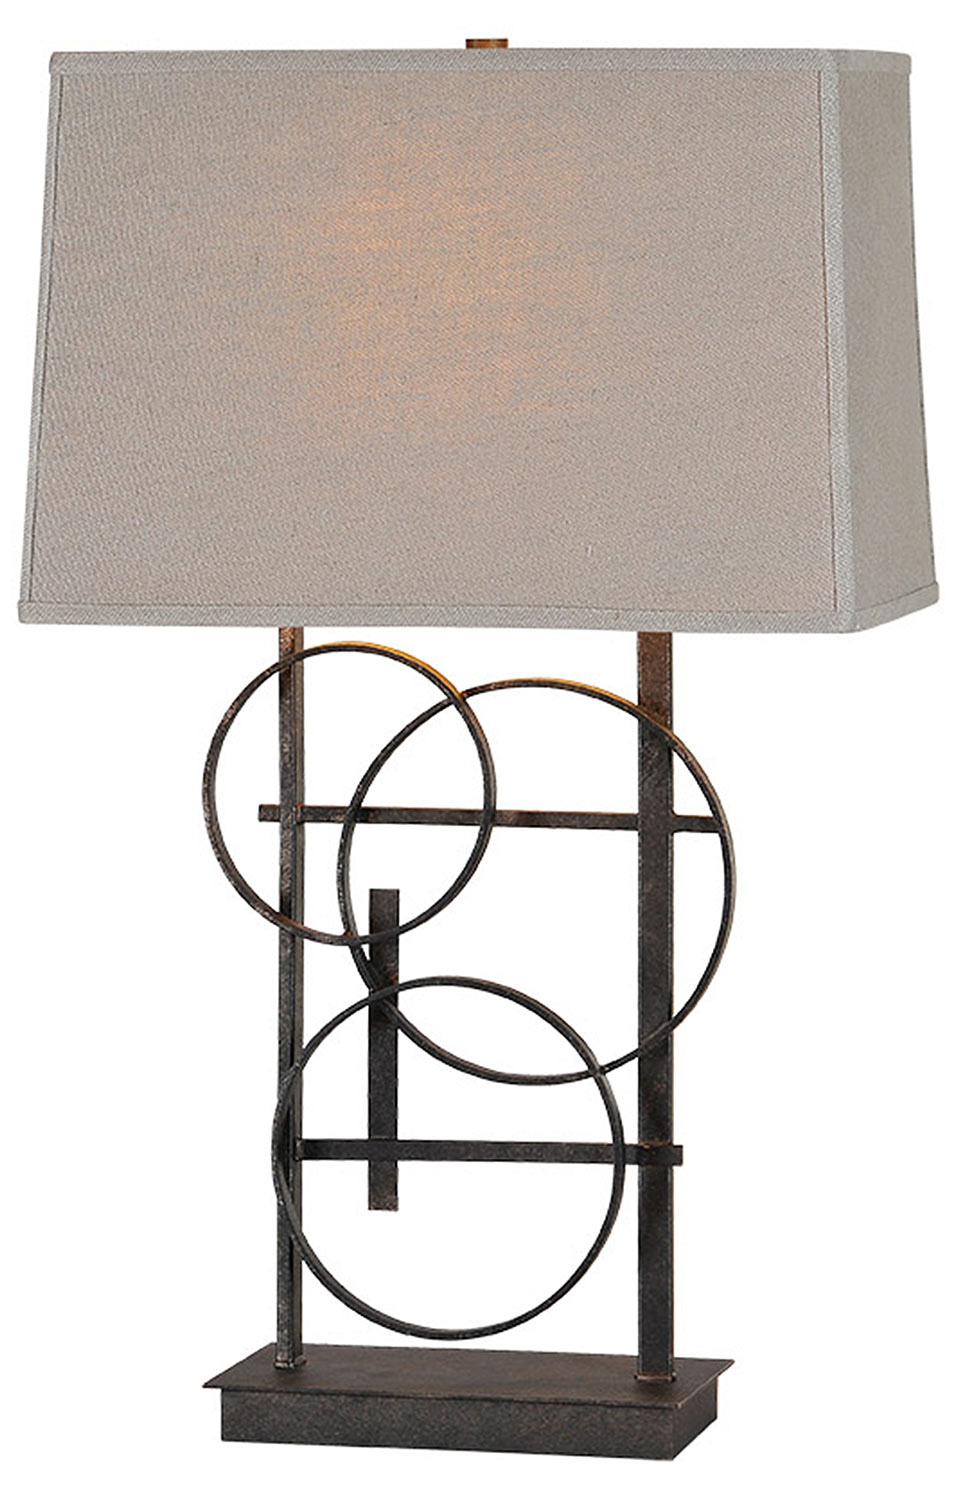 Ren-Wil Aria Table Lamp - Antique Bronze